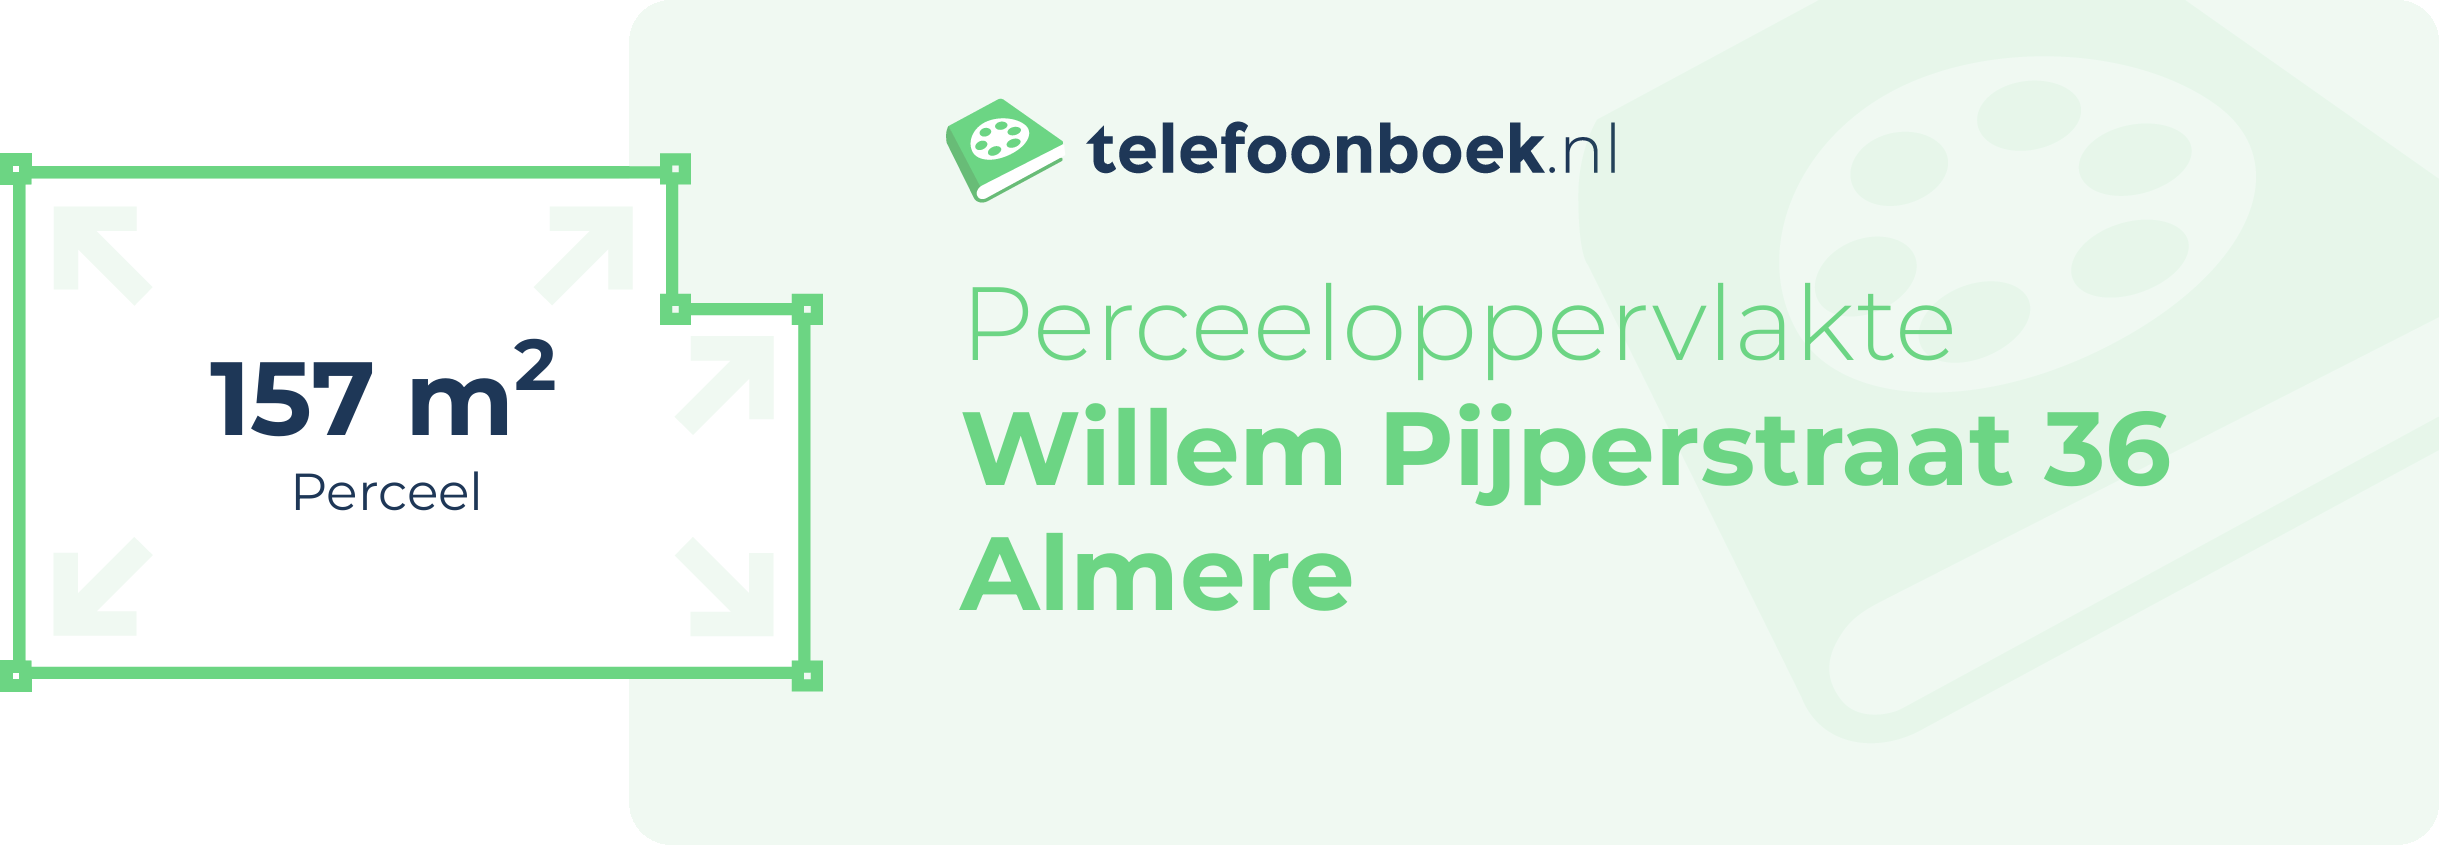 Perceeloppervlakte Willem Pijperstraat 36 Almere